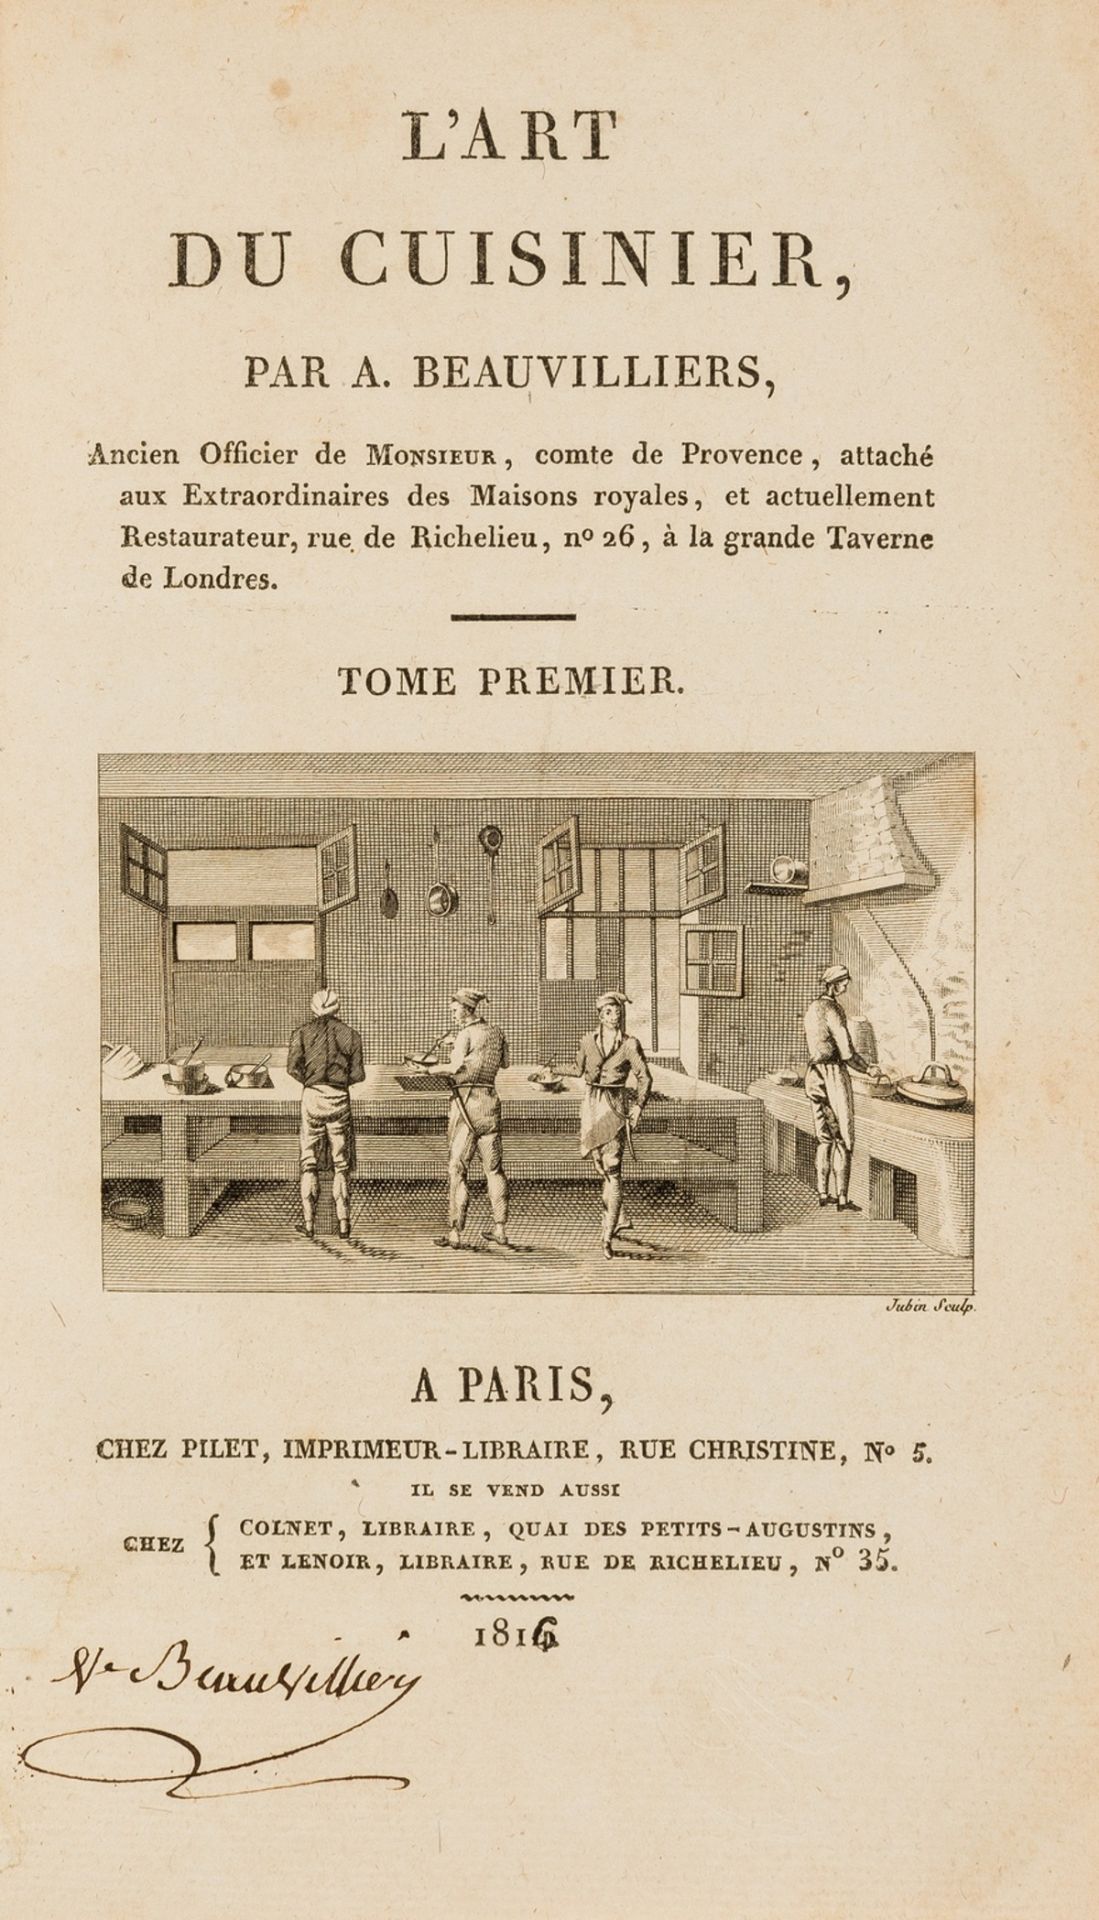 Beauvilliers (Antoine B.) L'Art du Cuisinier, 2 vol., including supplement, first edition, second …